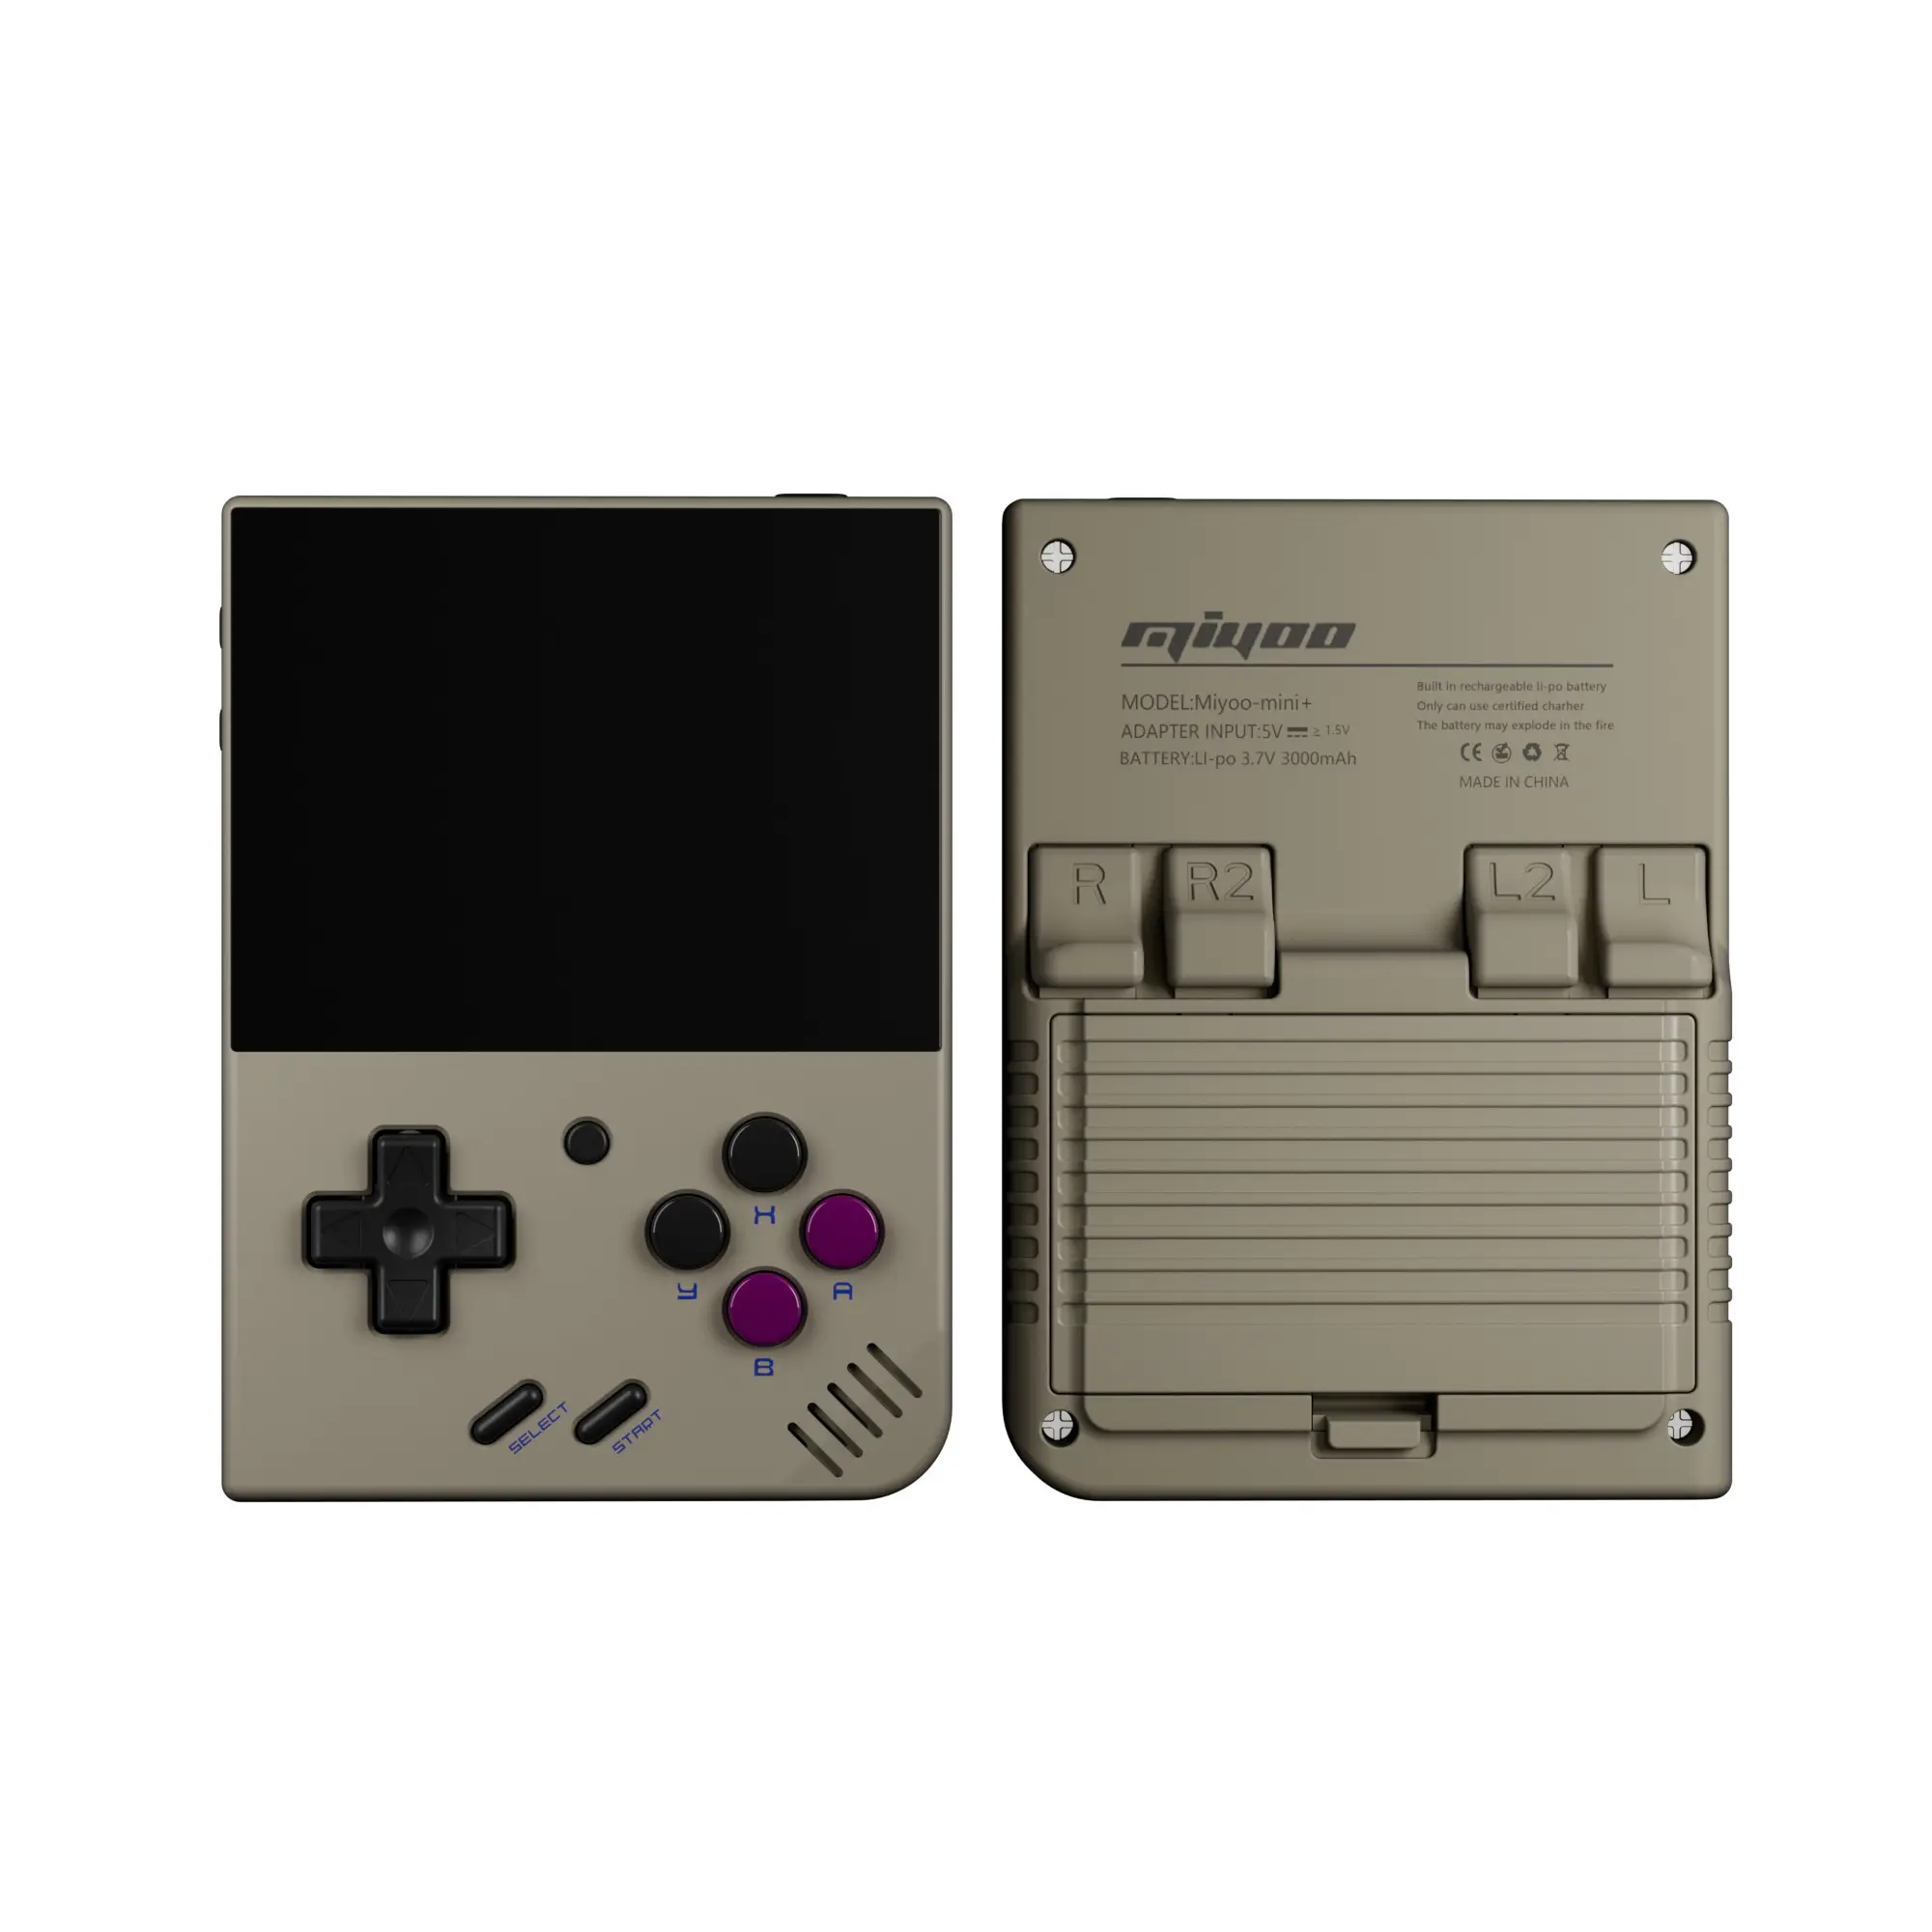 MIYOO MINI Plus Handheld Game Console Open Source 3.5 inch Miyoo Mini+ Retro Video Games Player Pocket Gaming Box Consoles